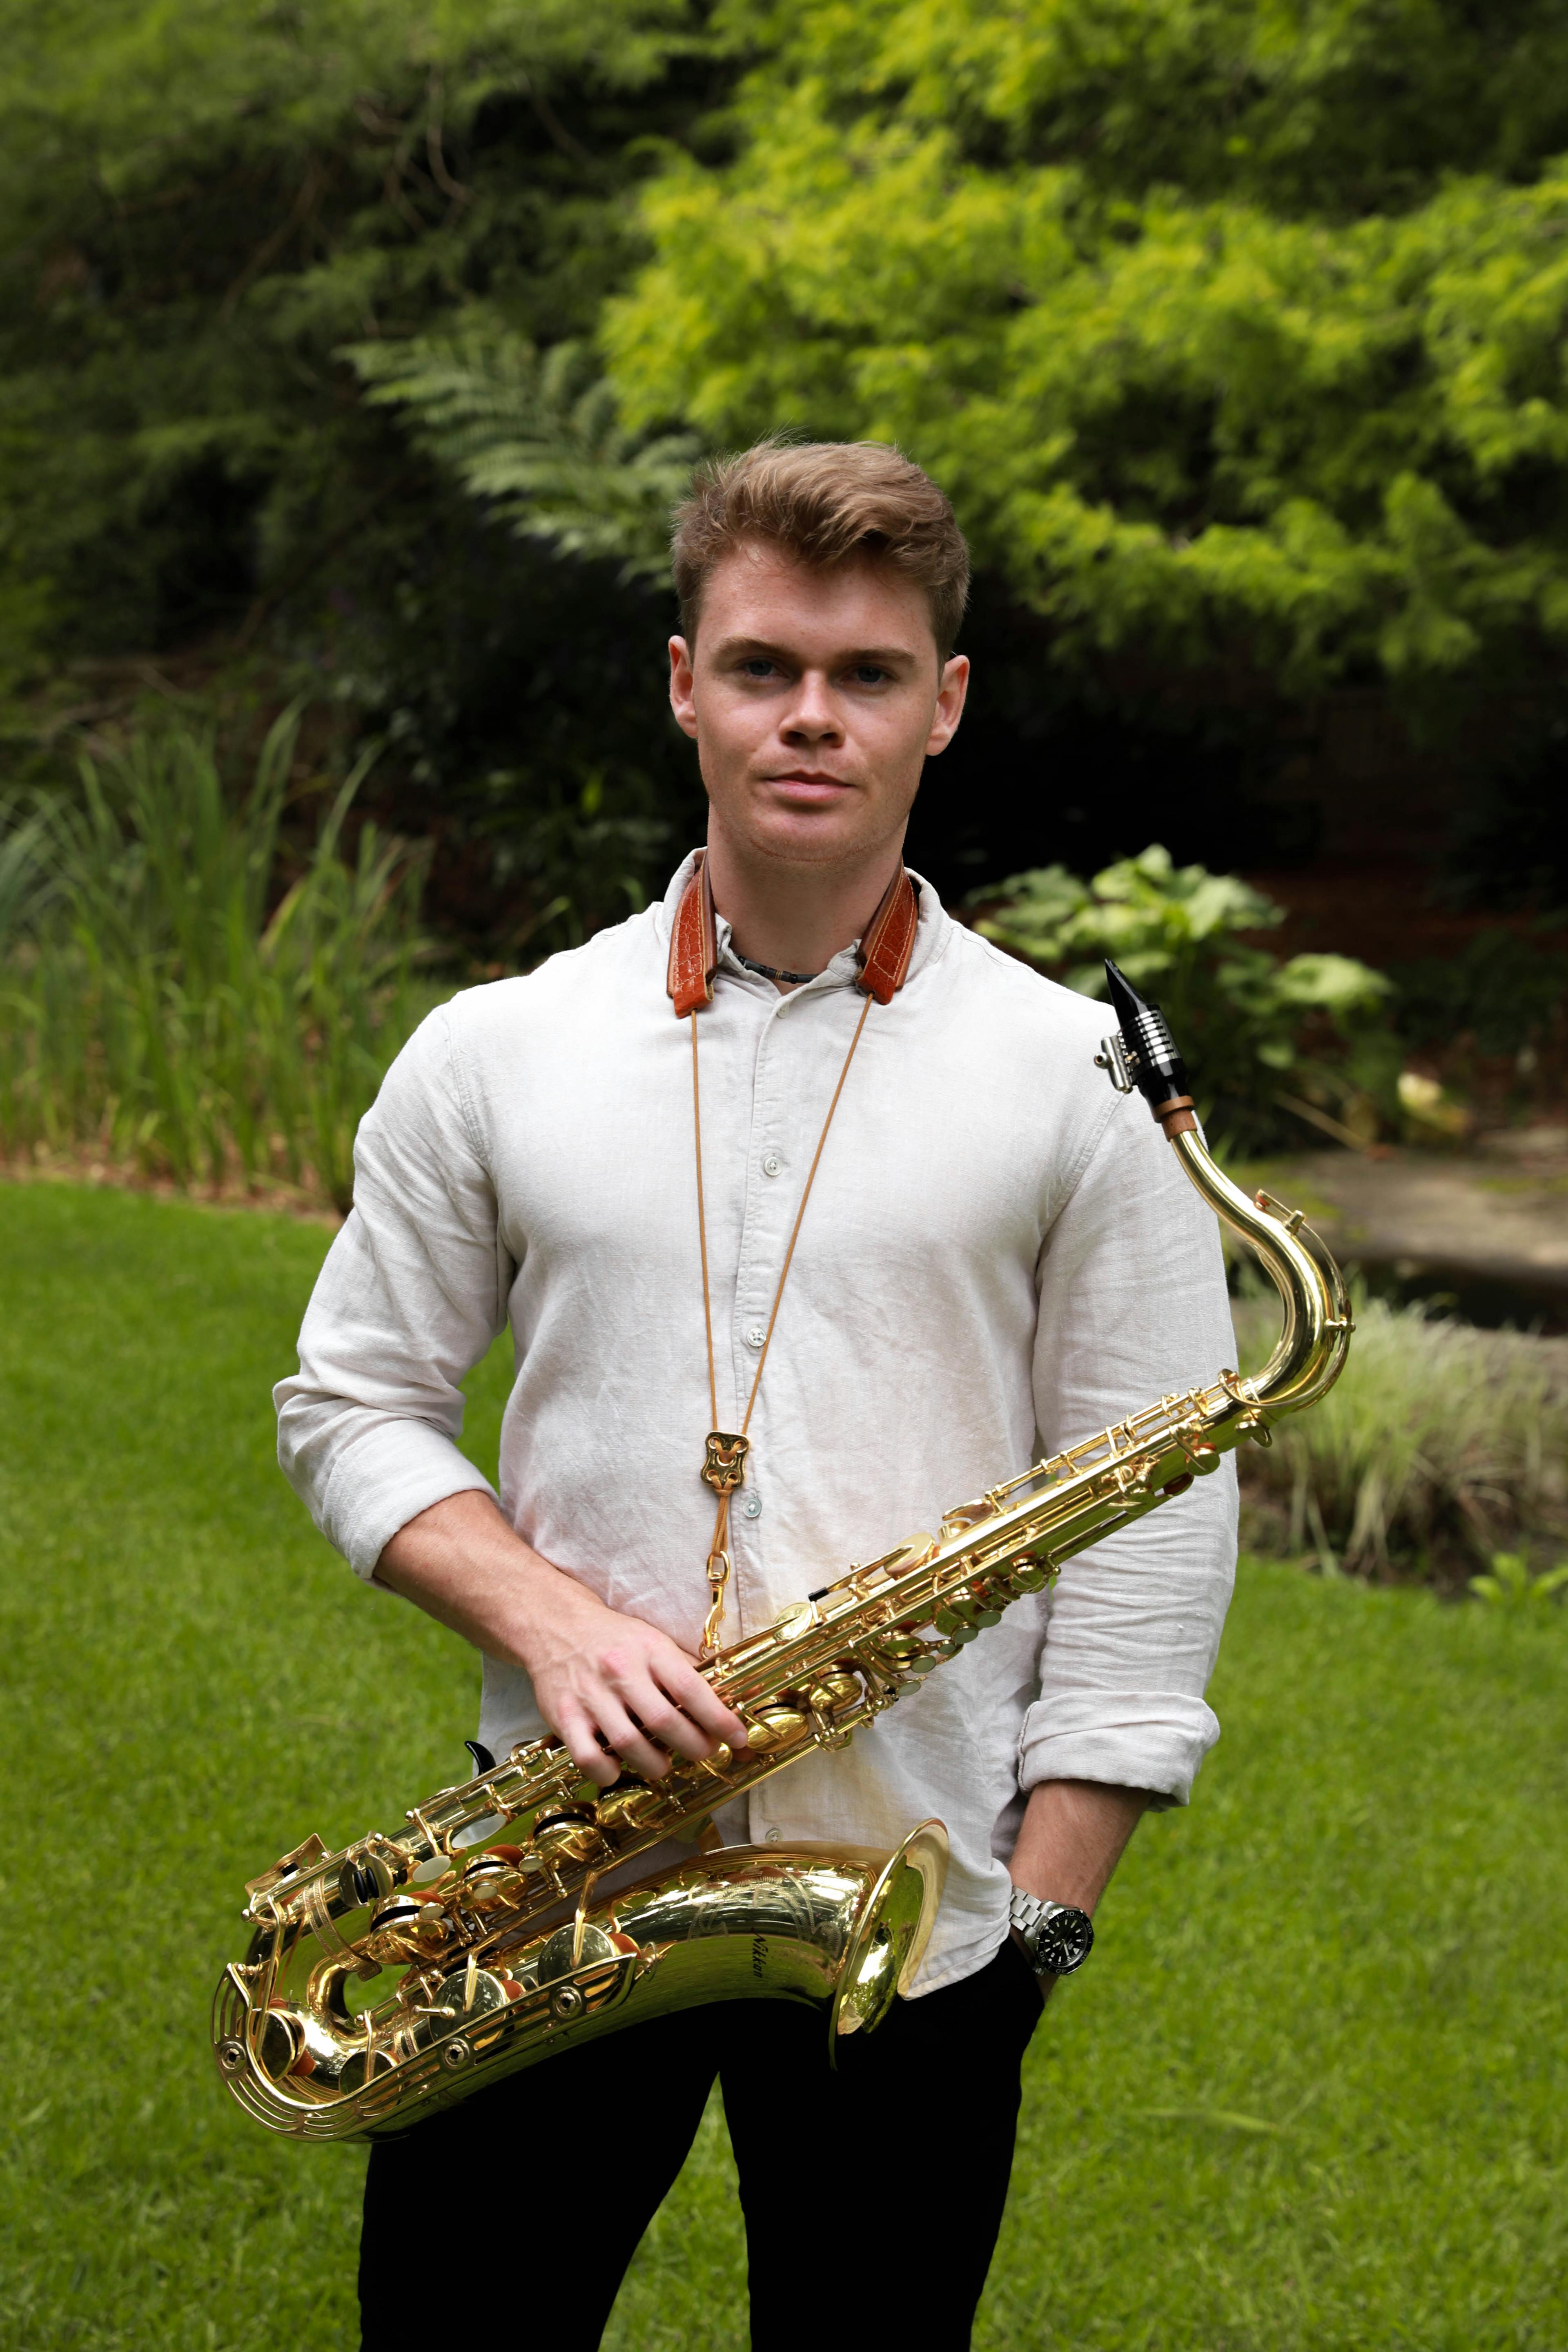 Jayden standing with a saxophone